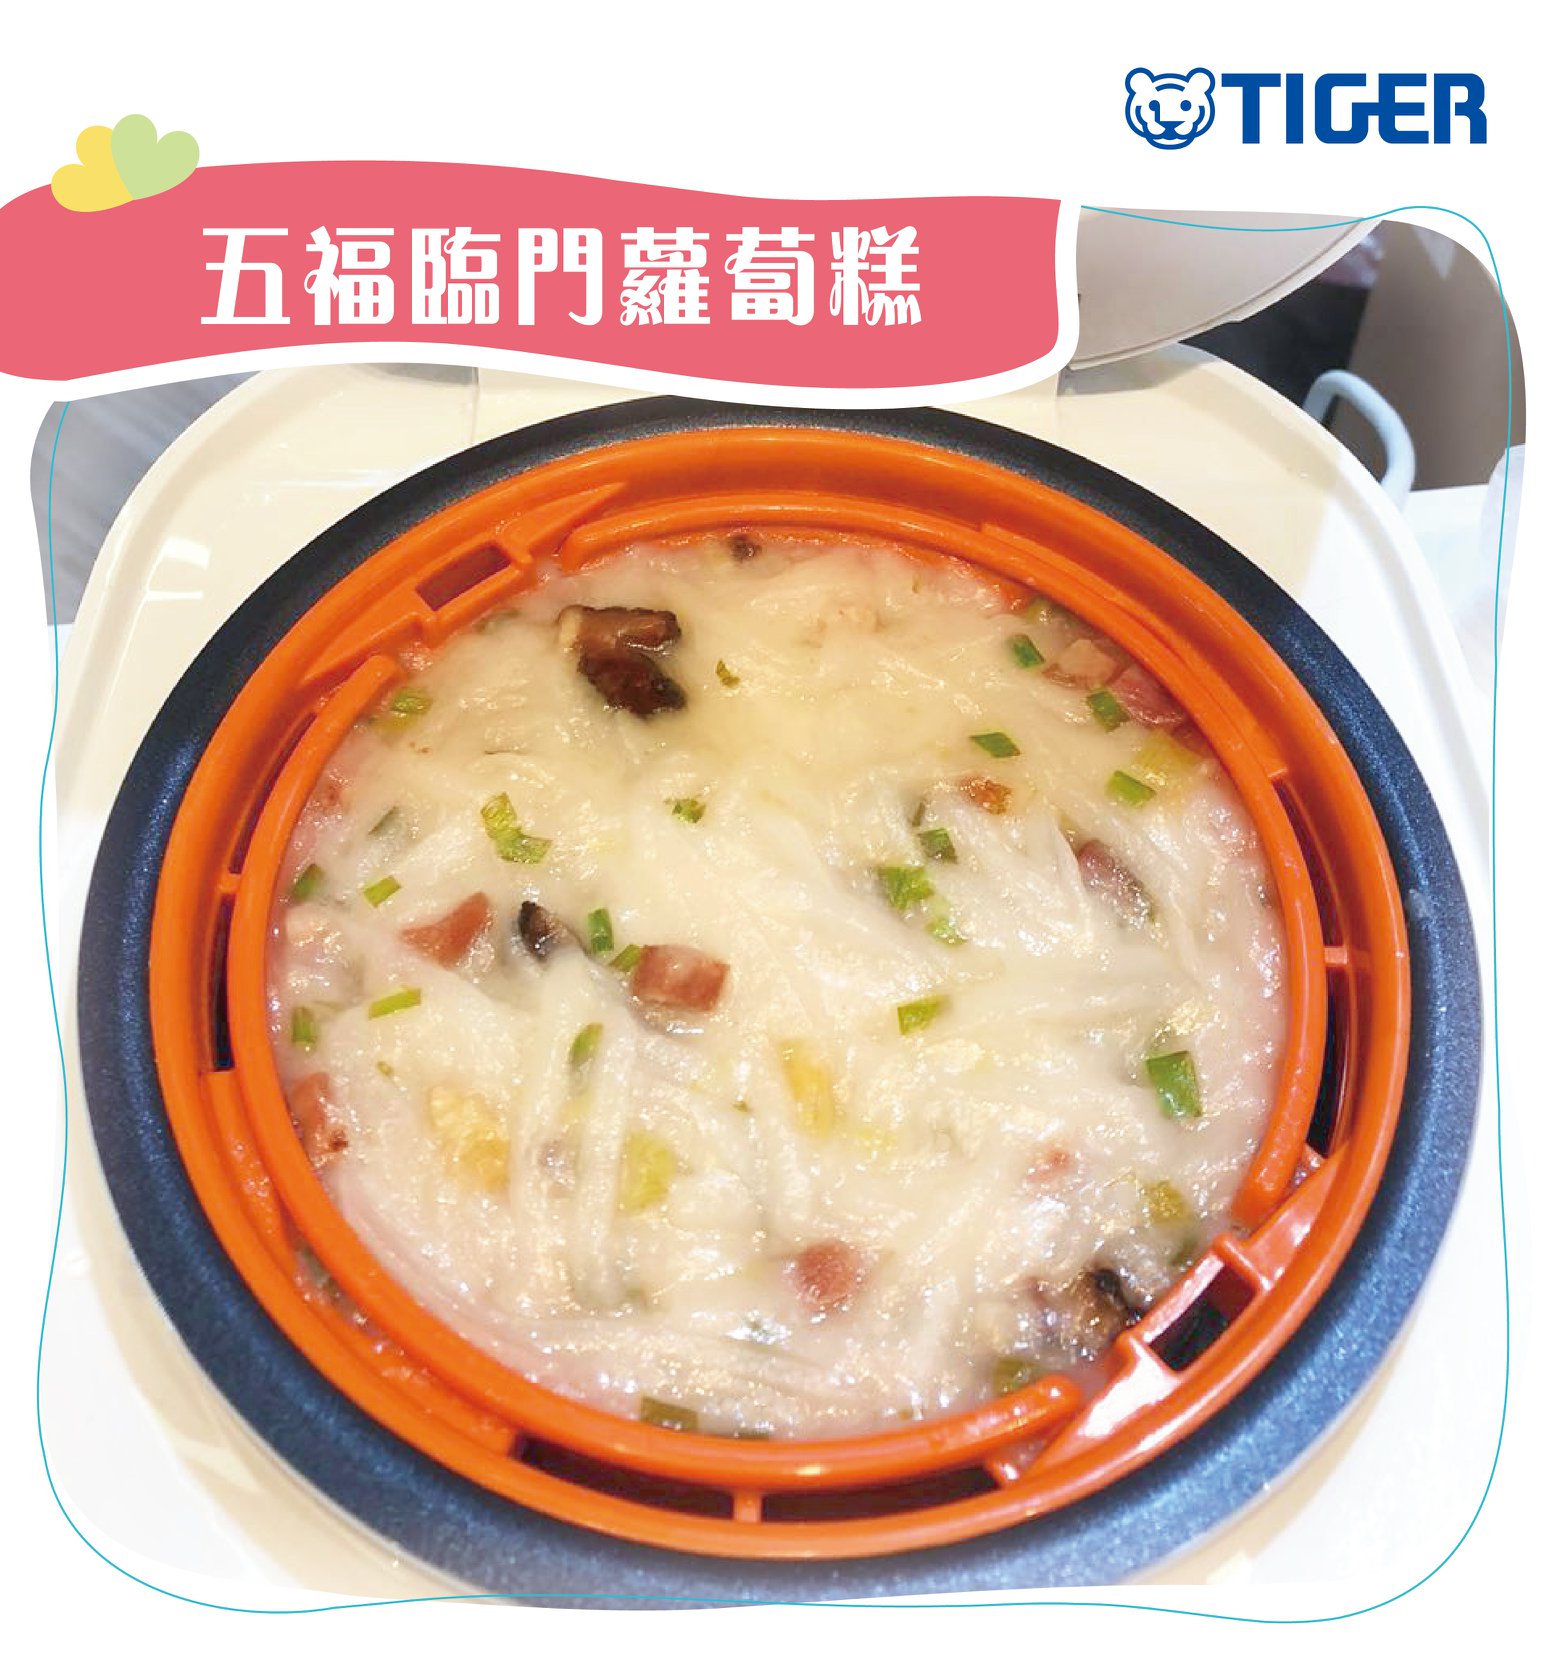 TIGER-recipe-turnip-cake.jpg (318 KB)